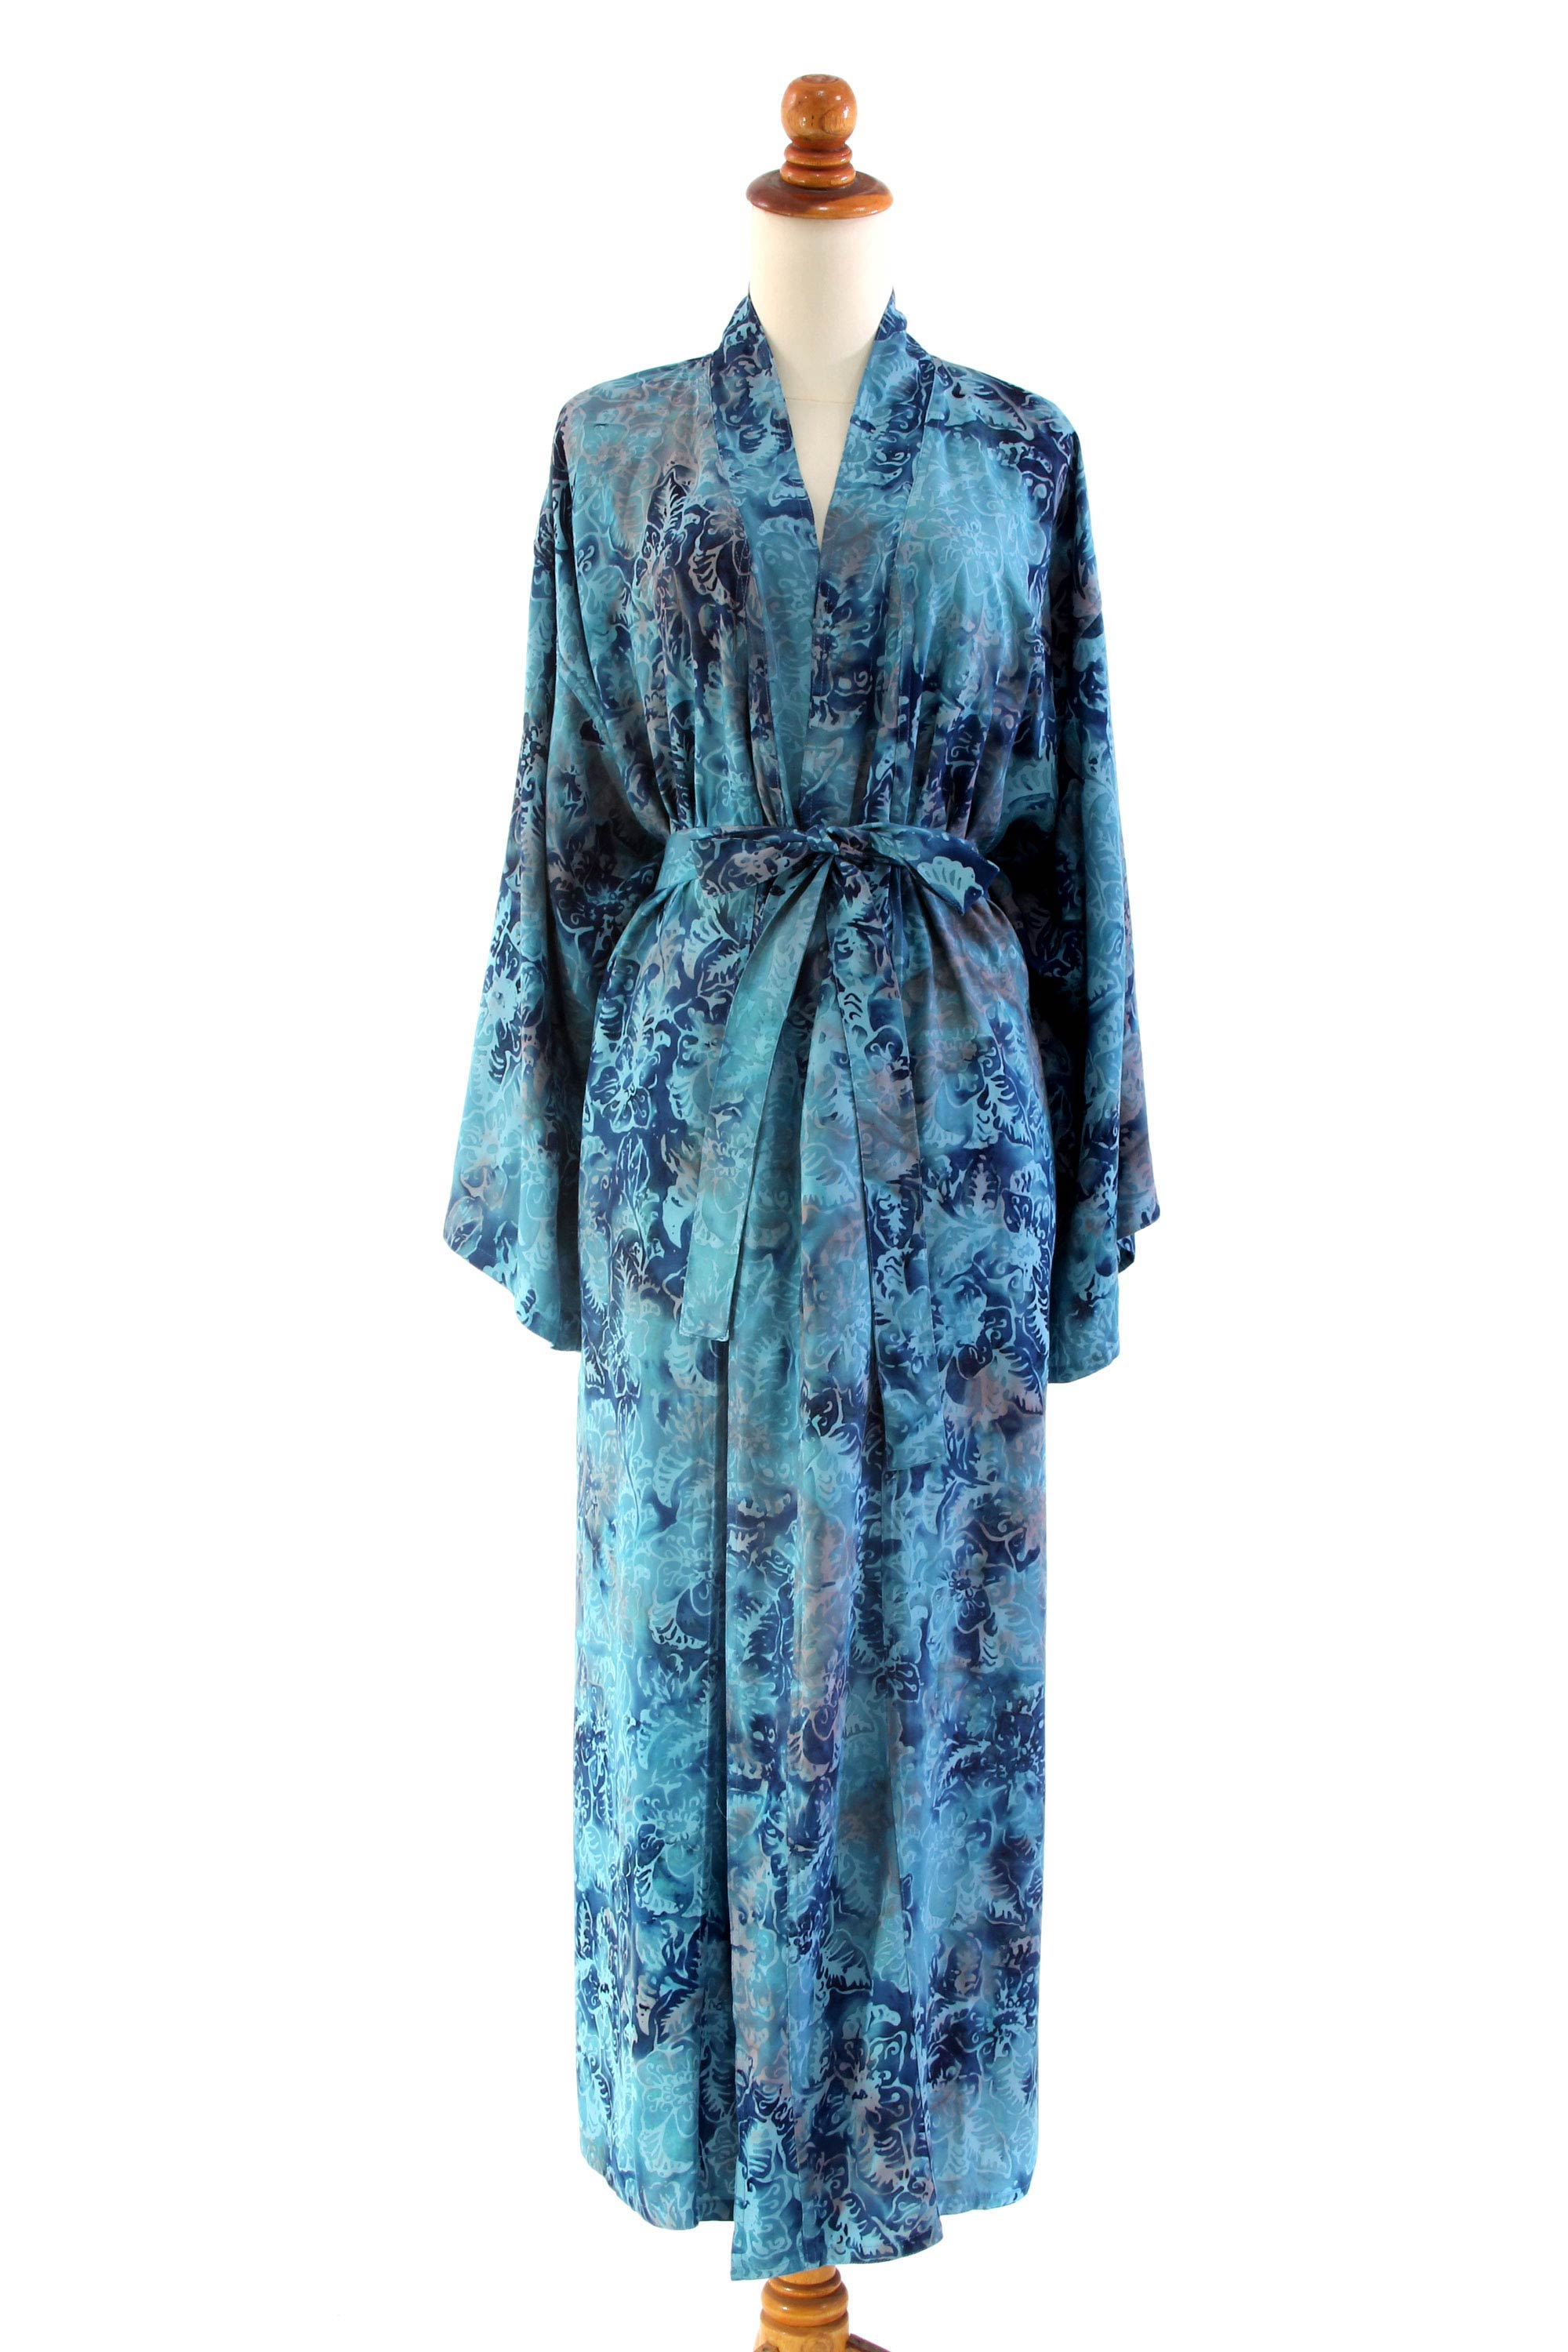 UNICEF Market | Batik Patterned Robe - Sapphire Dreams